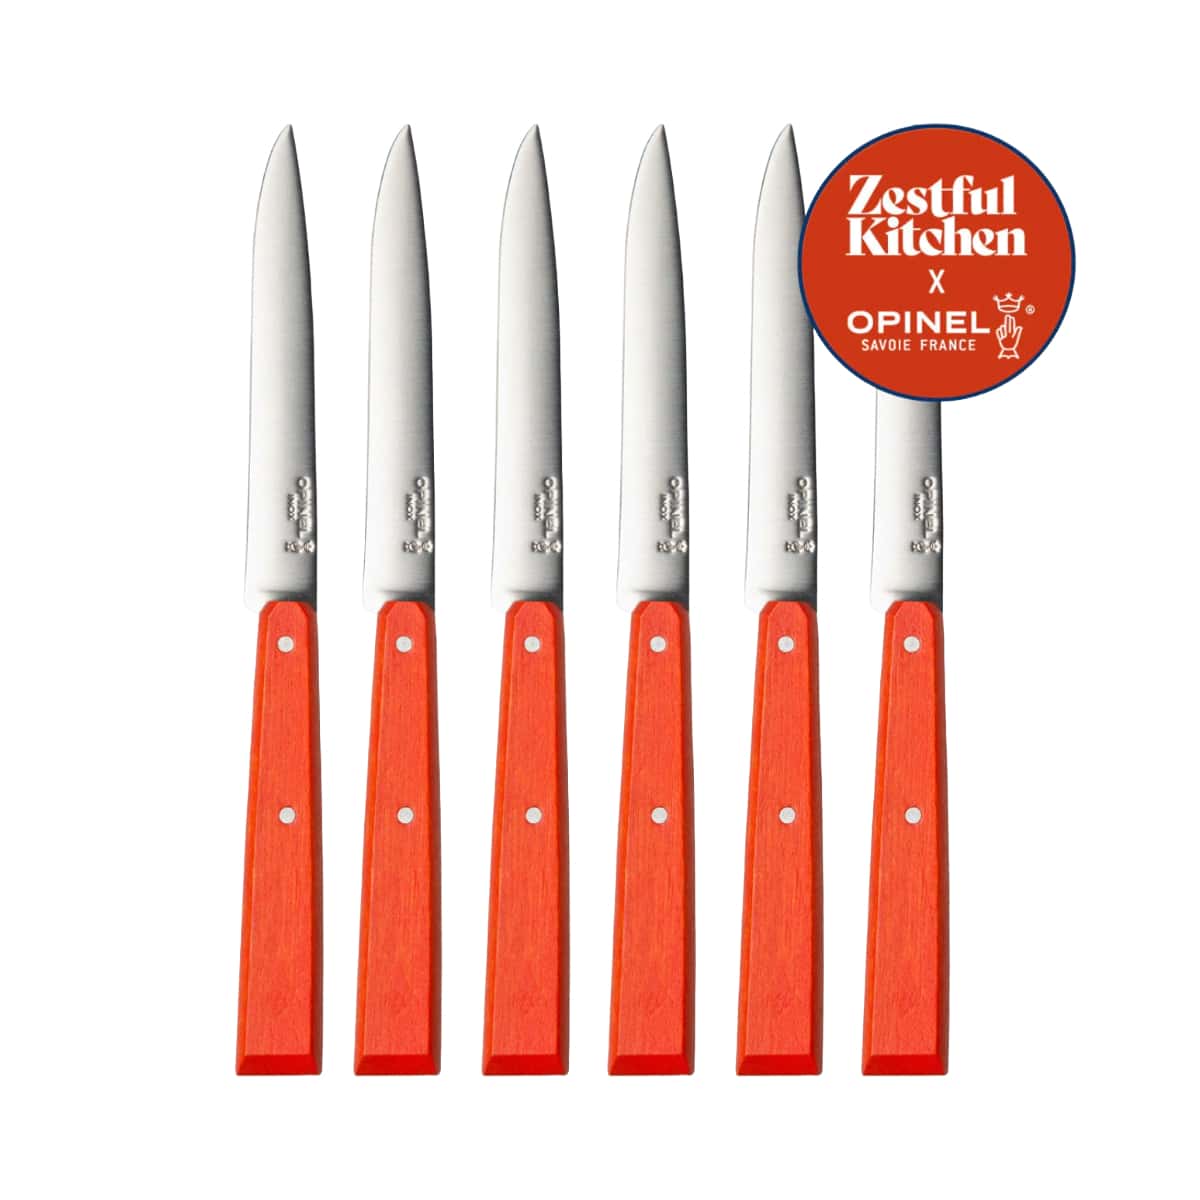 orange-handled steak knives on a white background with a branded Zestful Kitchen sticker